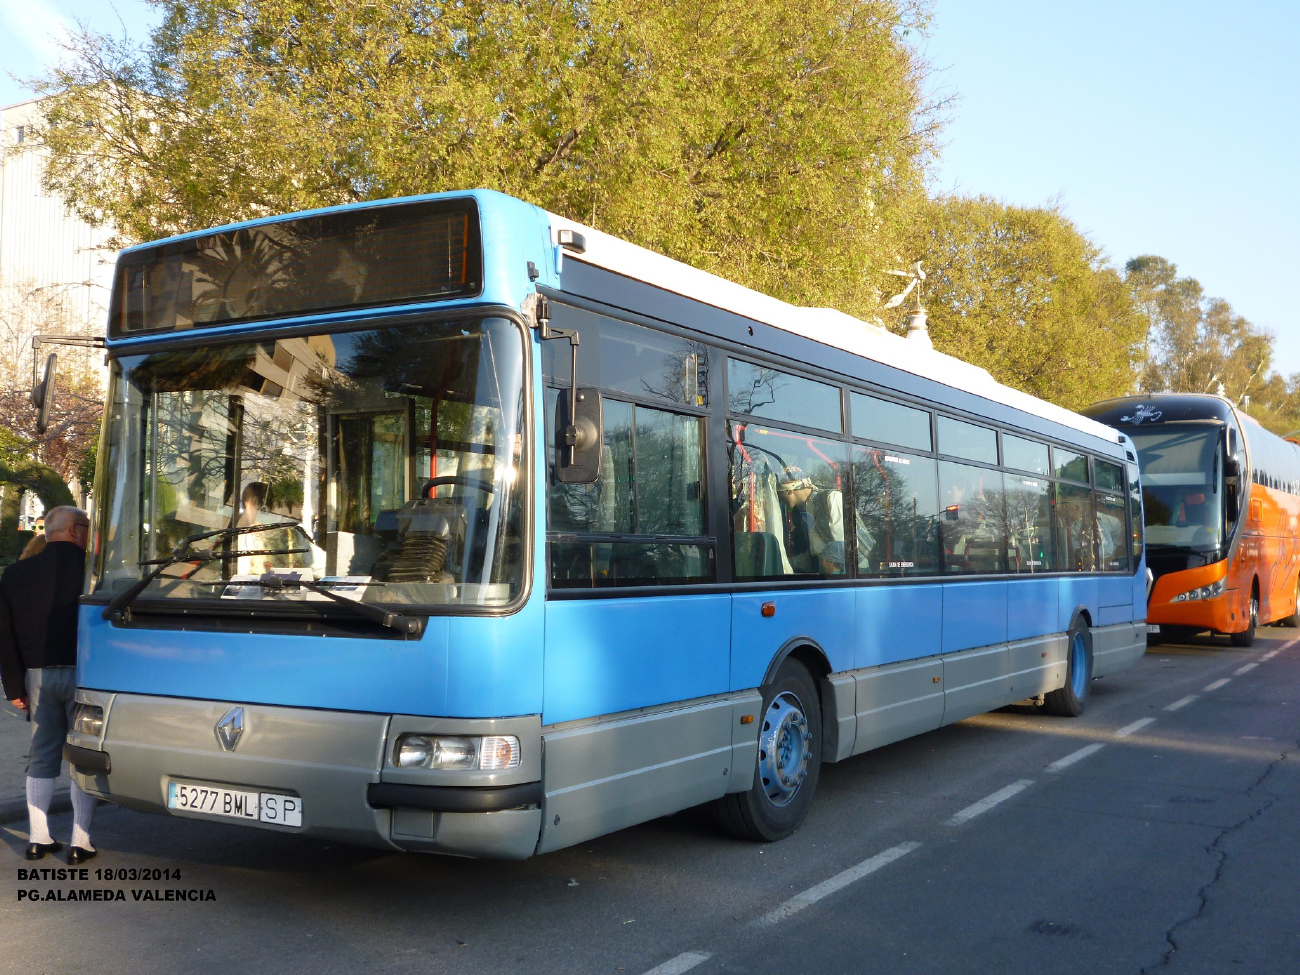 Valencia, Hispano CityLine (Irisbus Agora Line) No. 5277 BML